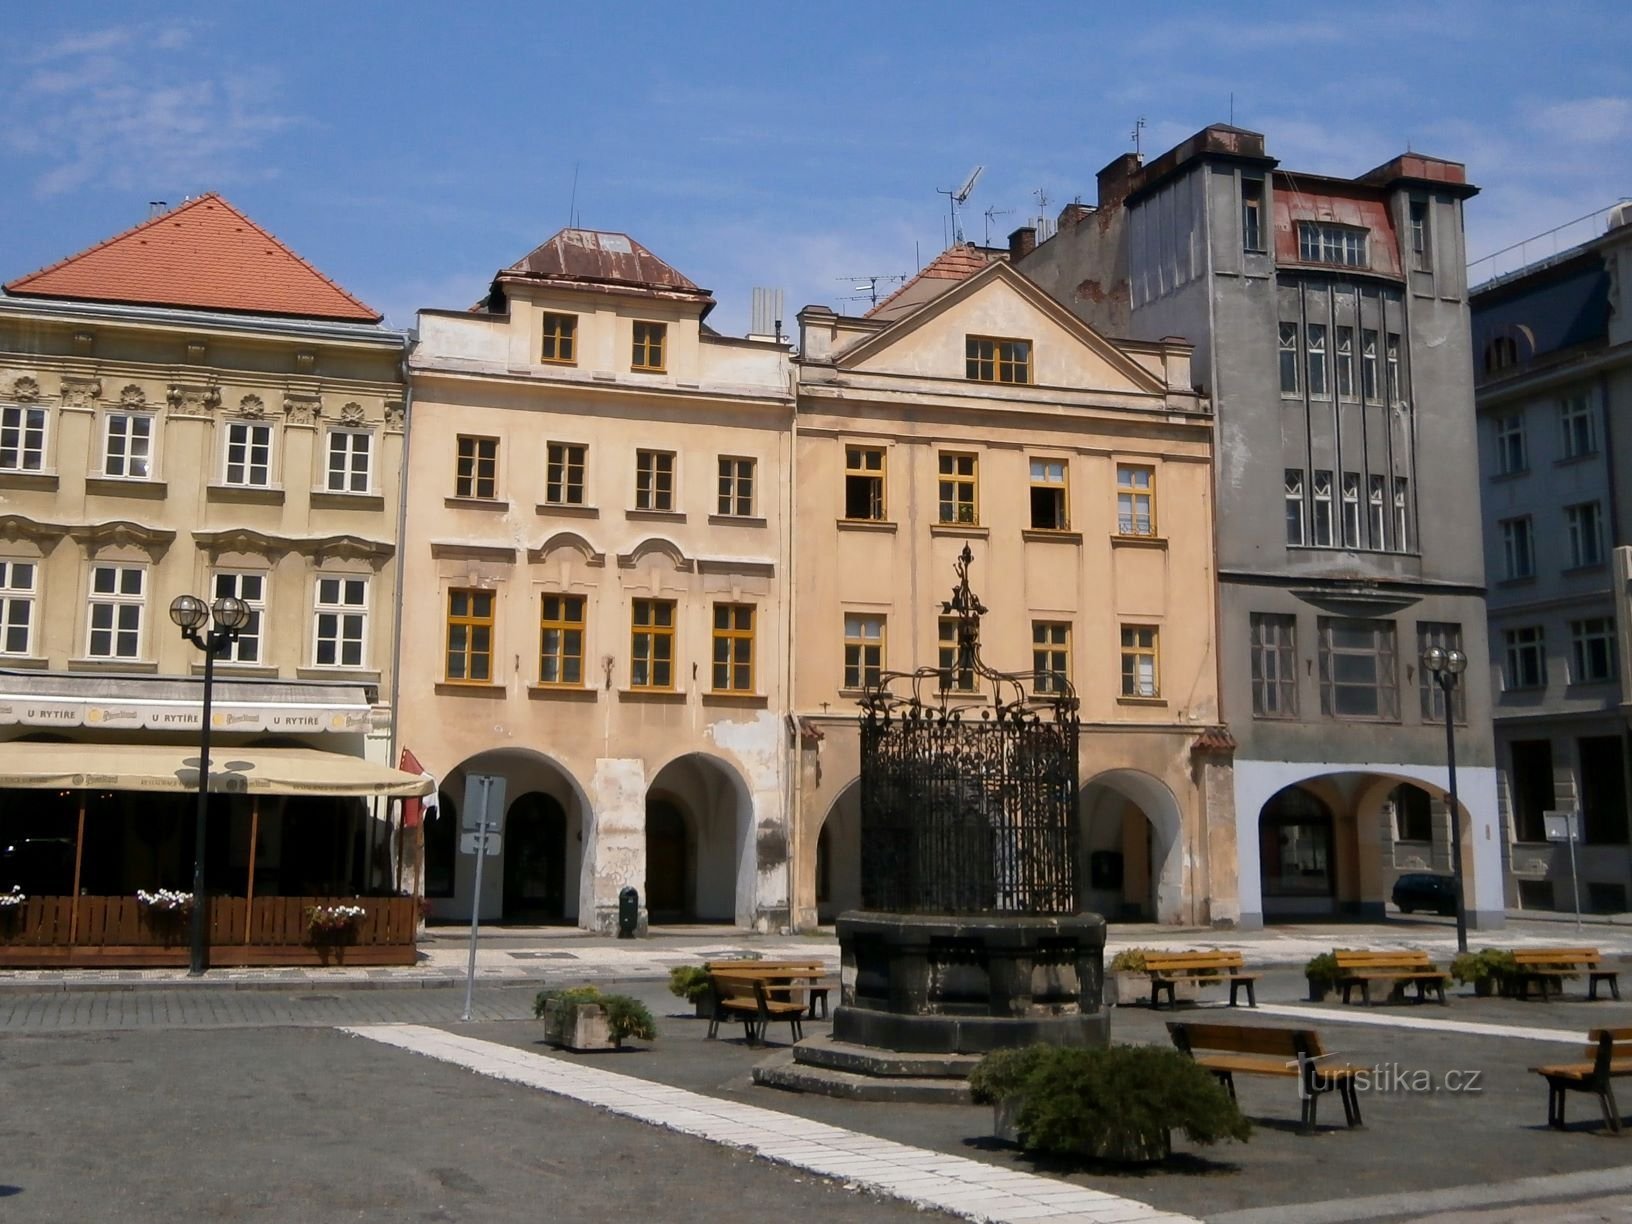 Velké náměstí n. 143-142 (Hradec Králové, 23.7.2016/XNUMX/XNUMX)